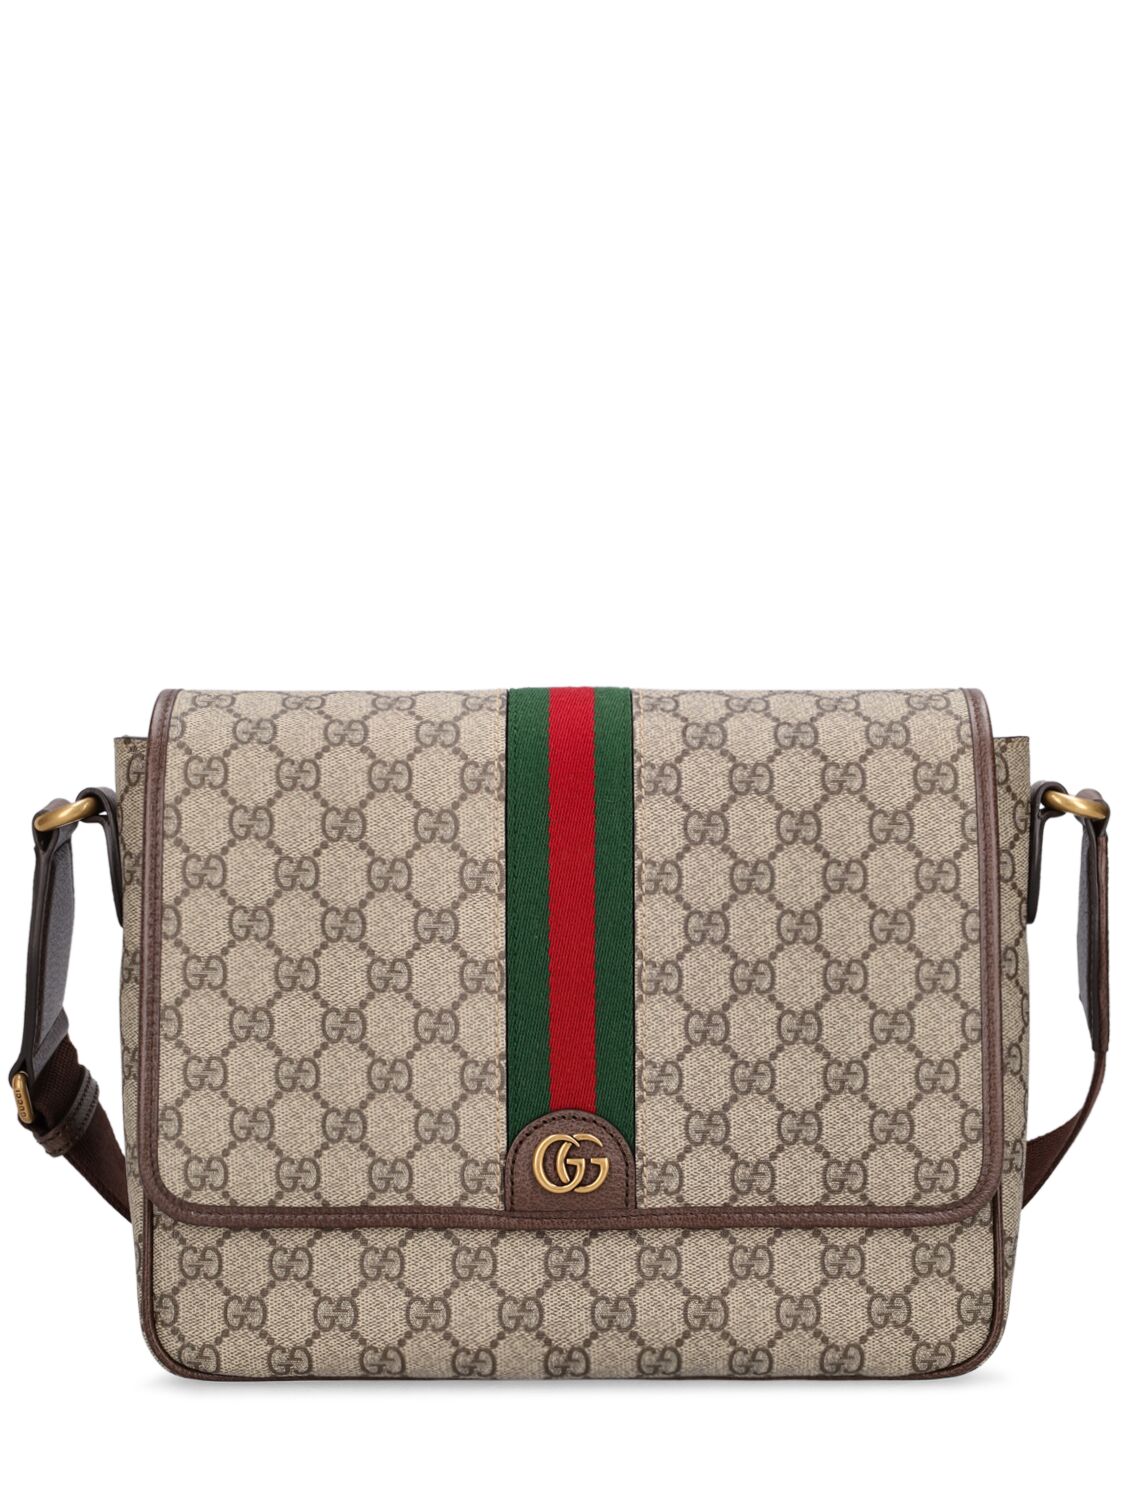 Gucci Ophidia Gg Supreme Medium Crossbody Bag In Beige